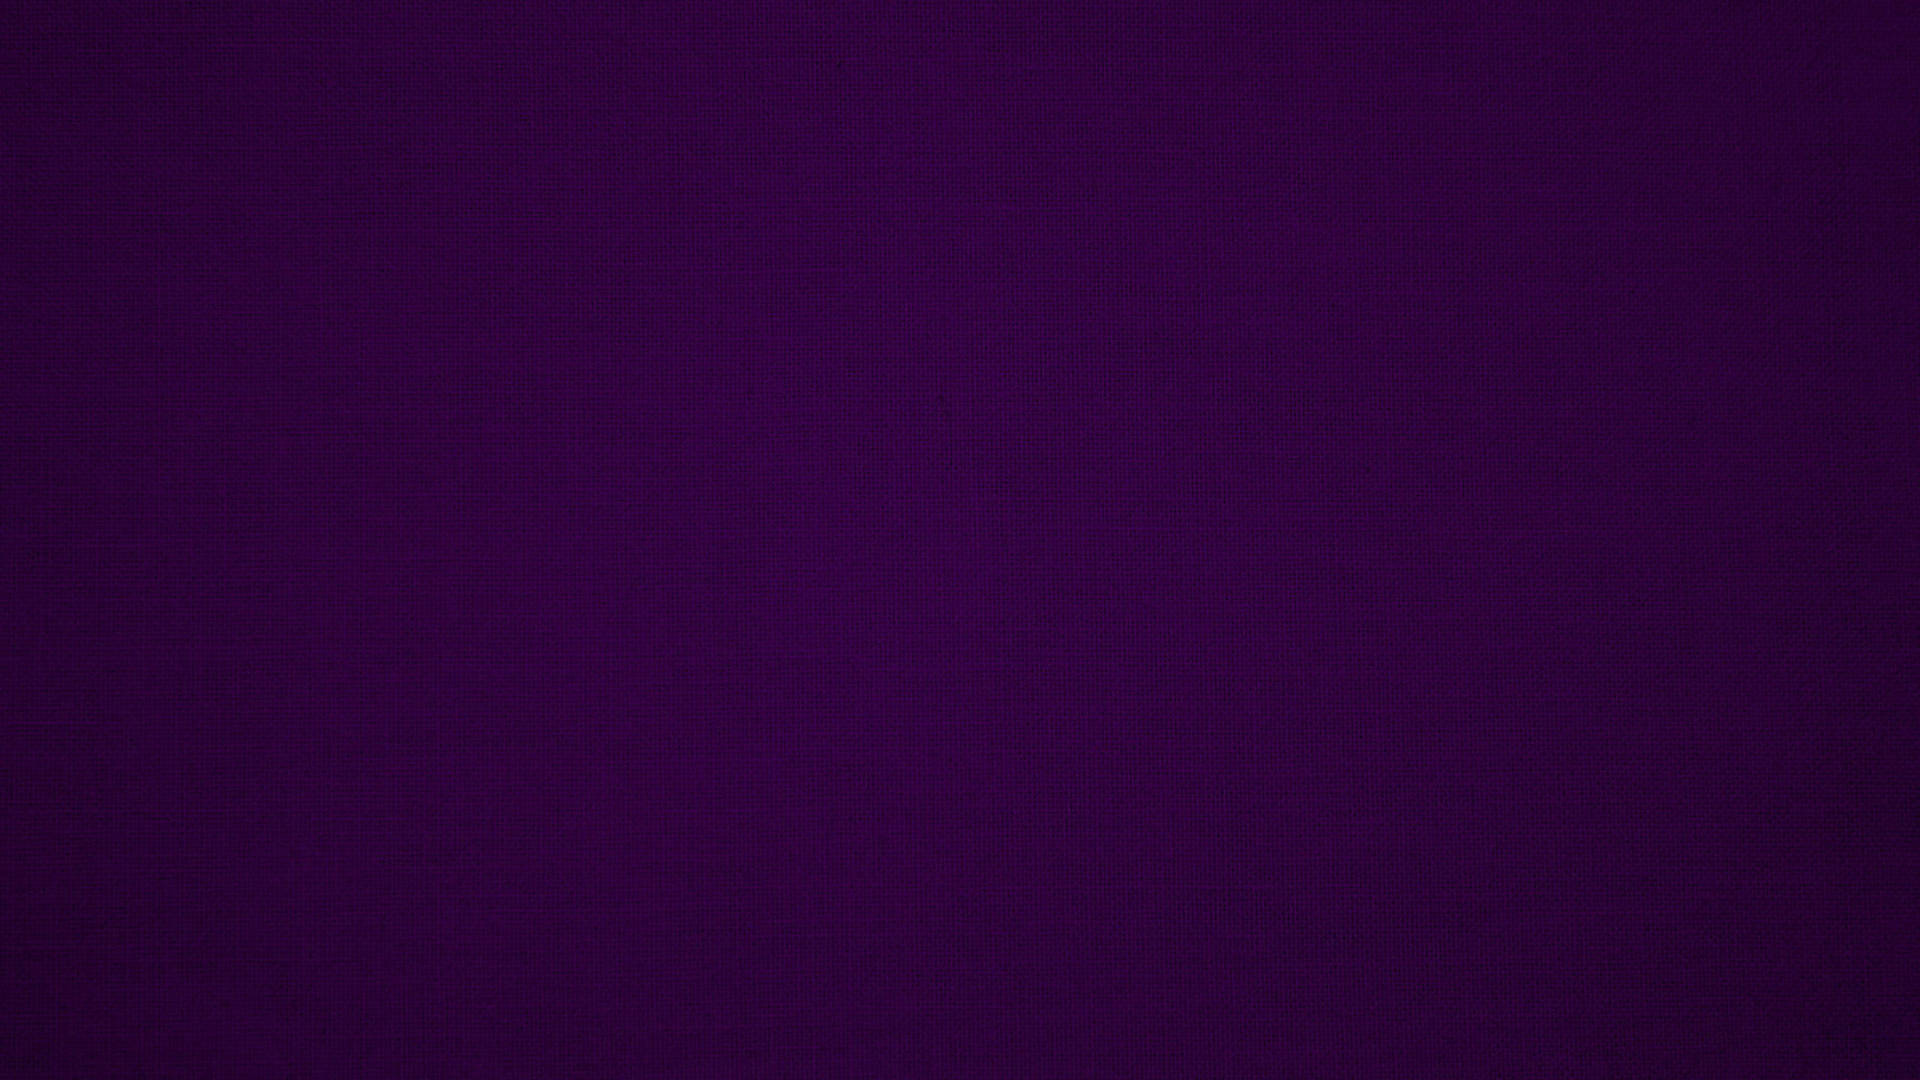 Dark Plain Purple Wallpaper